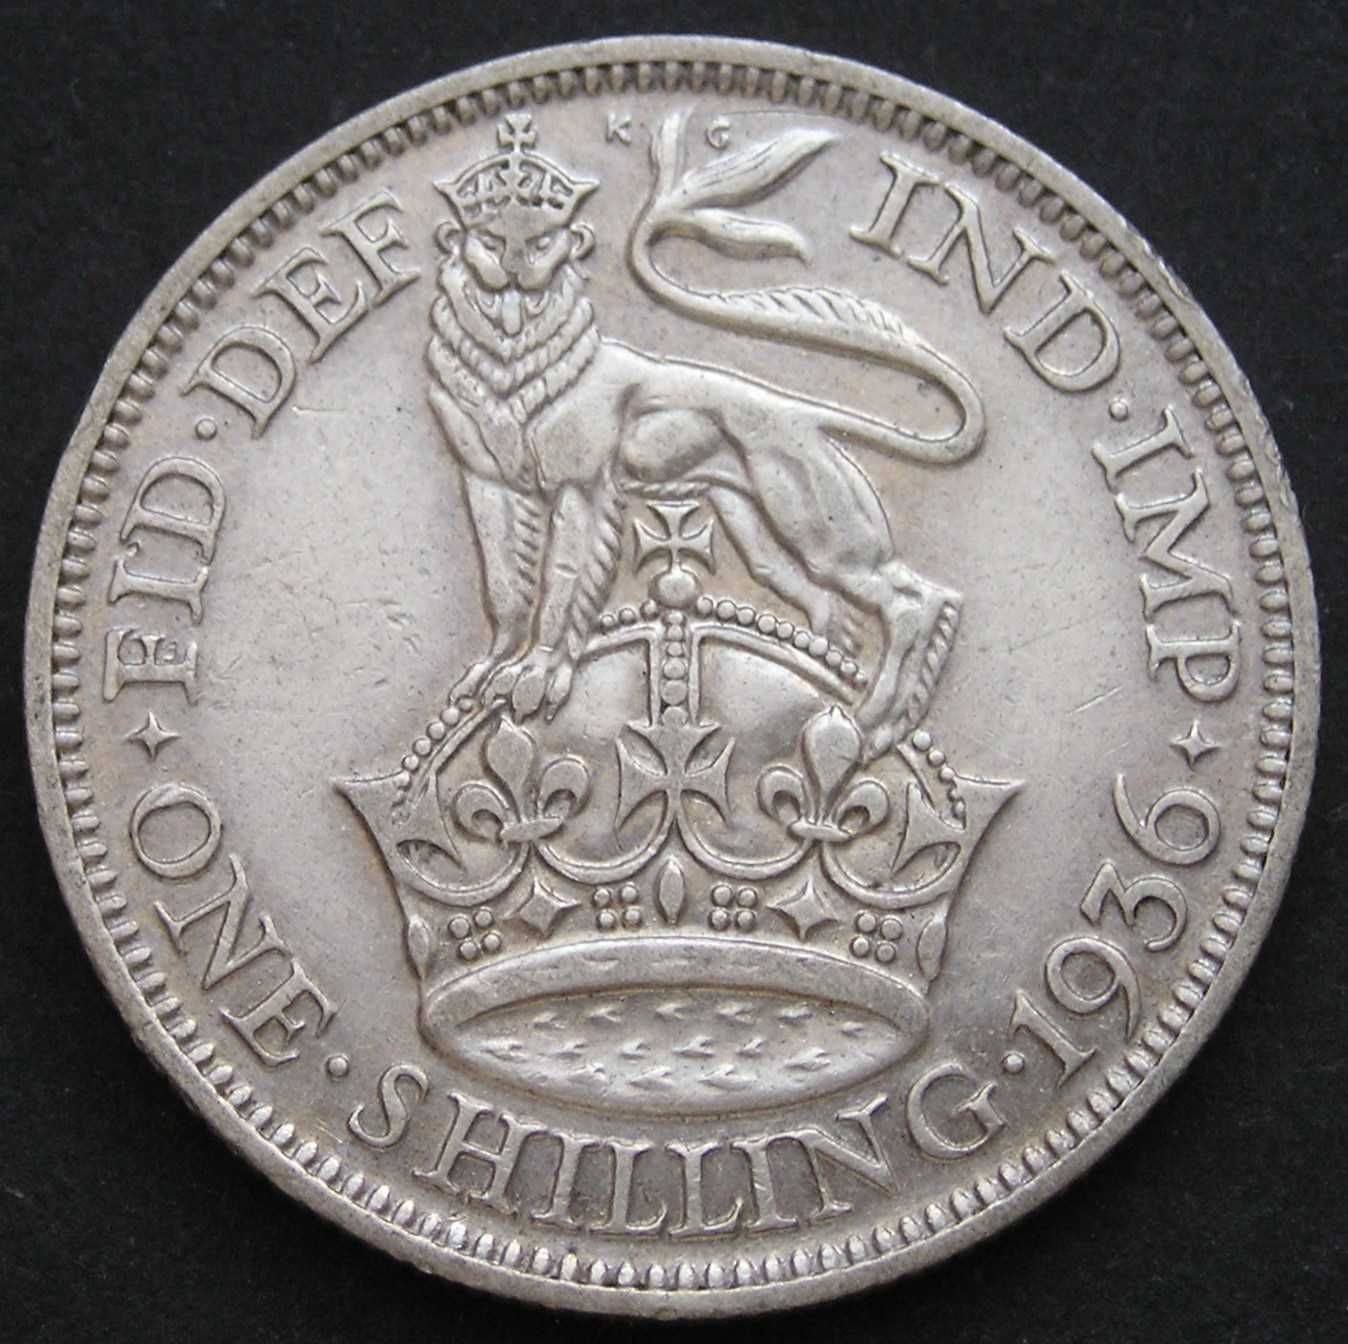 Wielka Brytania 1 shilling 1936 - król Jerzy V - SREBRO